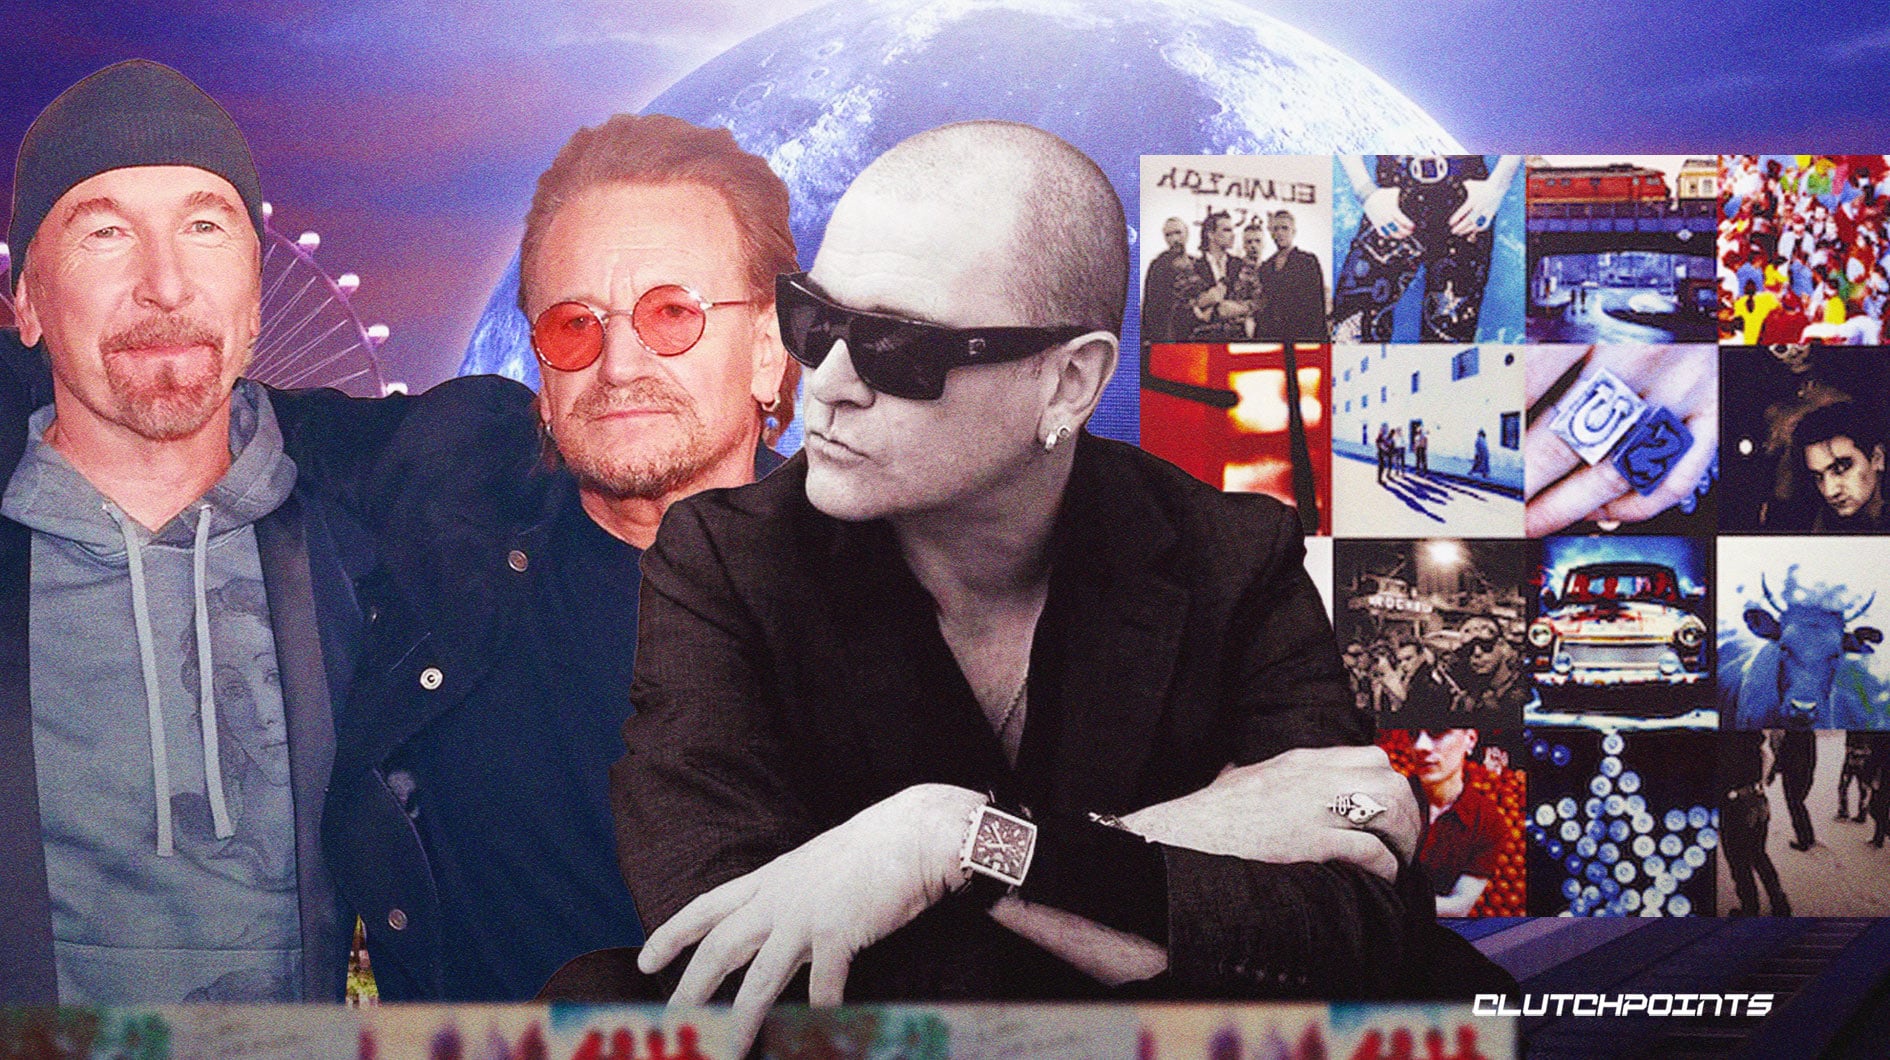 U2, Sphere, Achtung Baby, The Edge, Bono, Gavin Friday, So Cruel